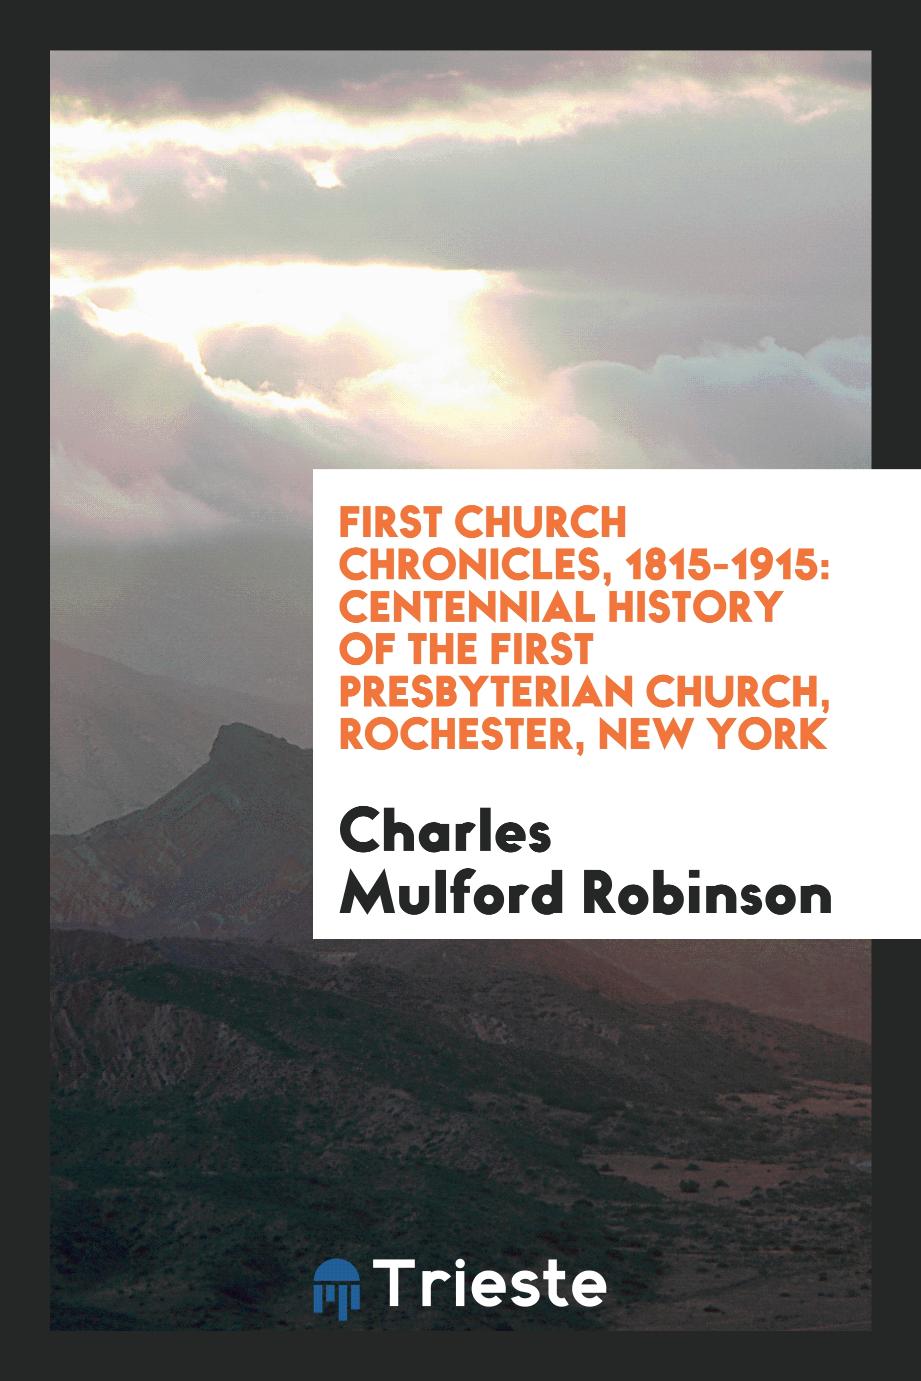 First Church chronicles, 1815-1915: centennial history of the First Presbyterian Church, Rochester, New York